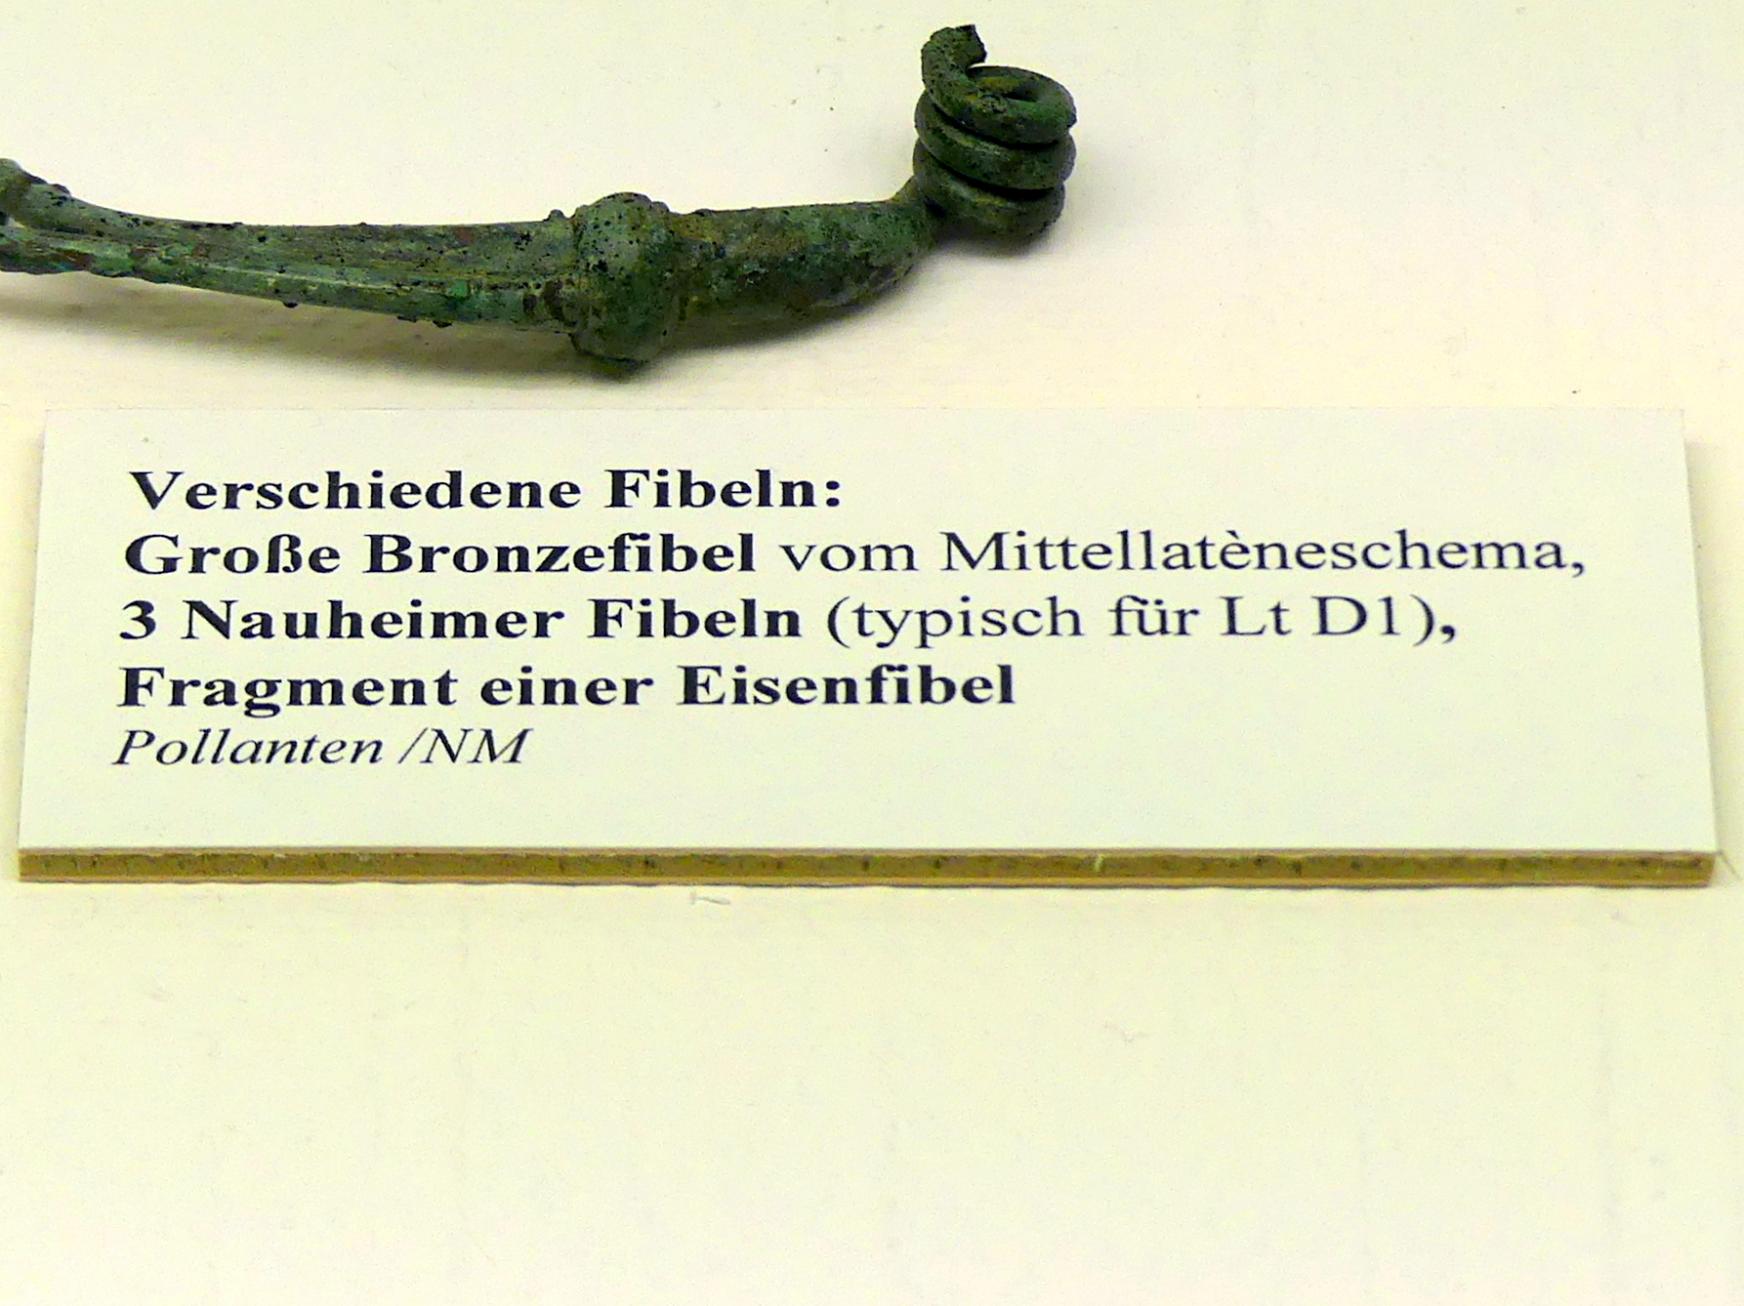 3 Nauheimer Fibeln, Spätlatènezeit D, 700 - 100 v. Chr., Bild 2/2